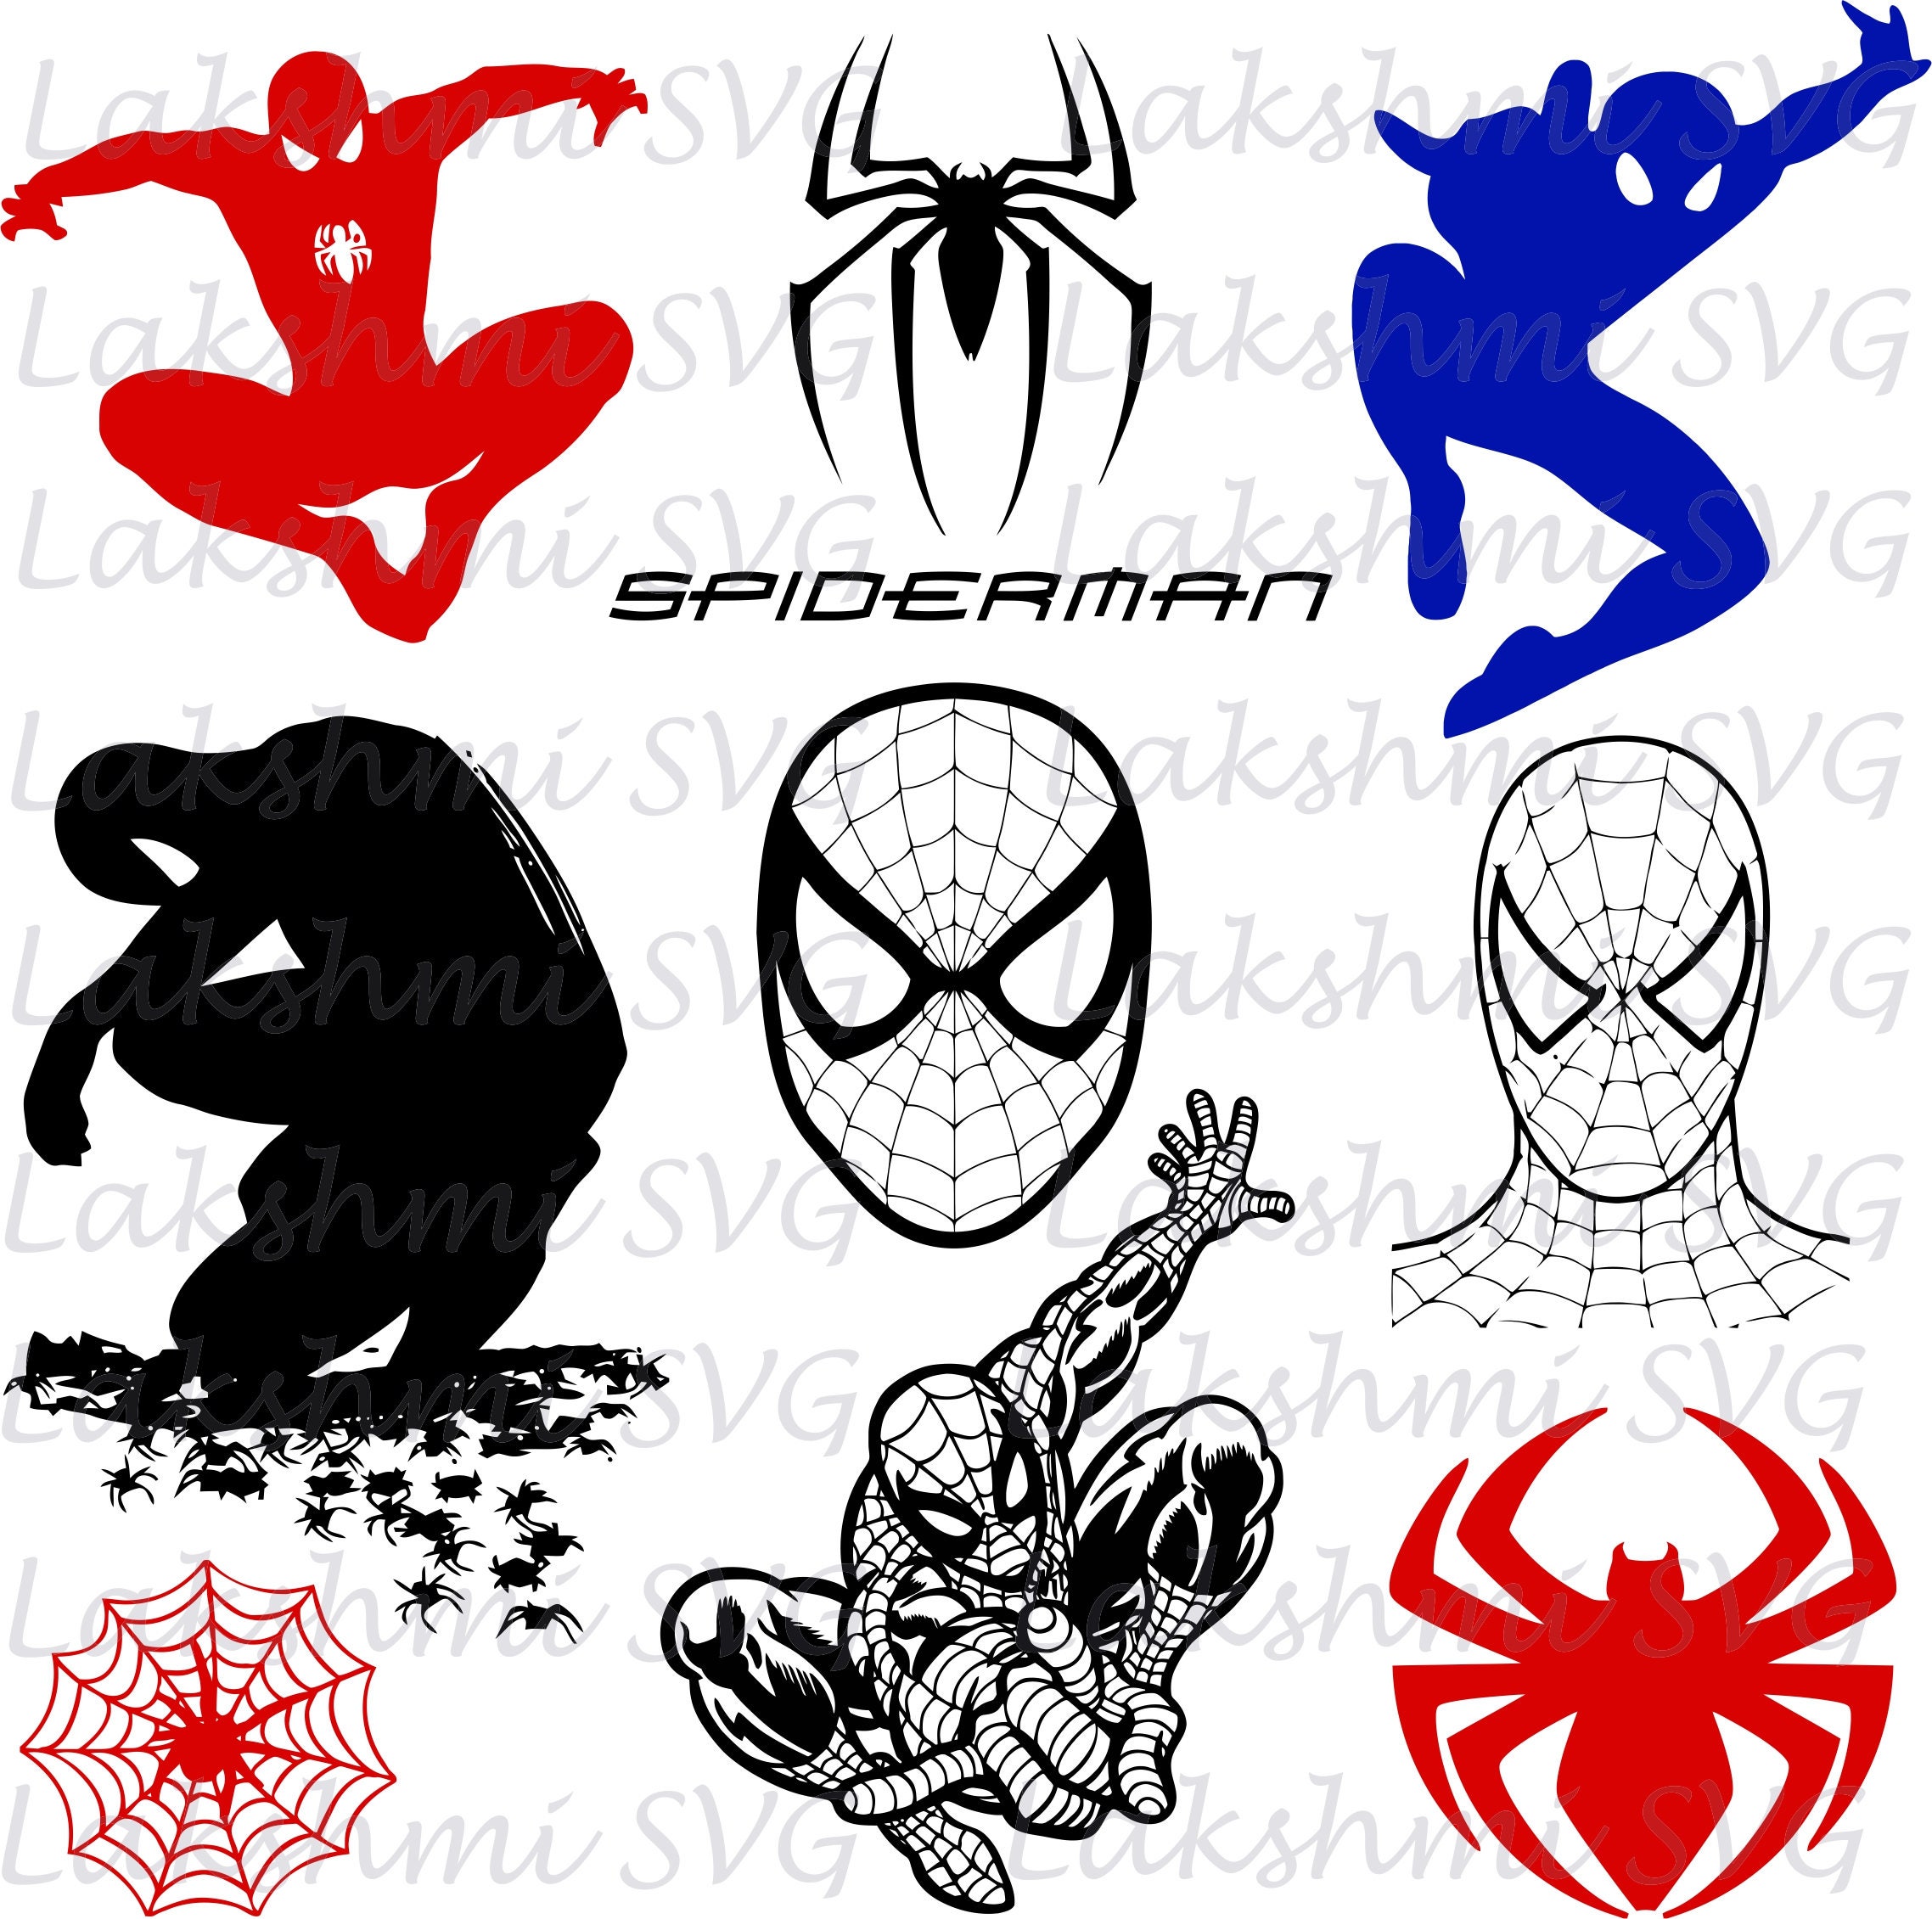 Download Spiderman svgSuper Hero SVGspiderman silhouette Logos and